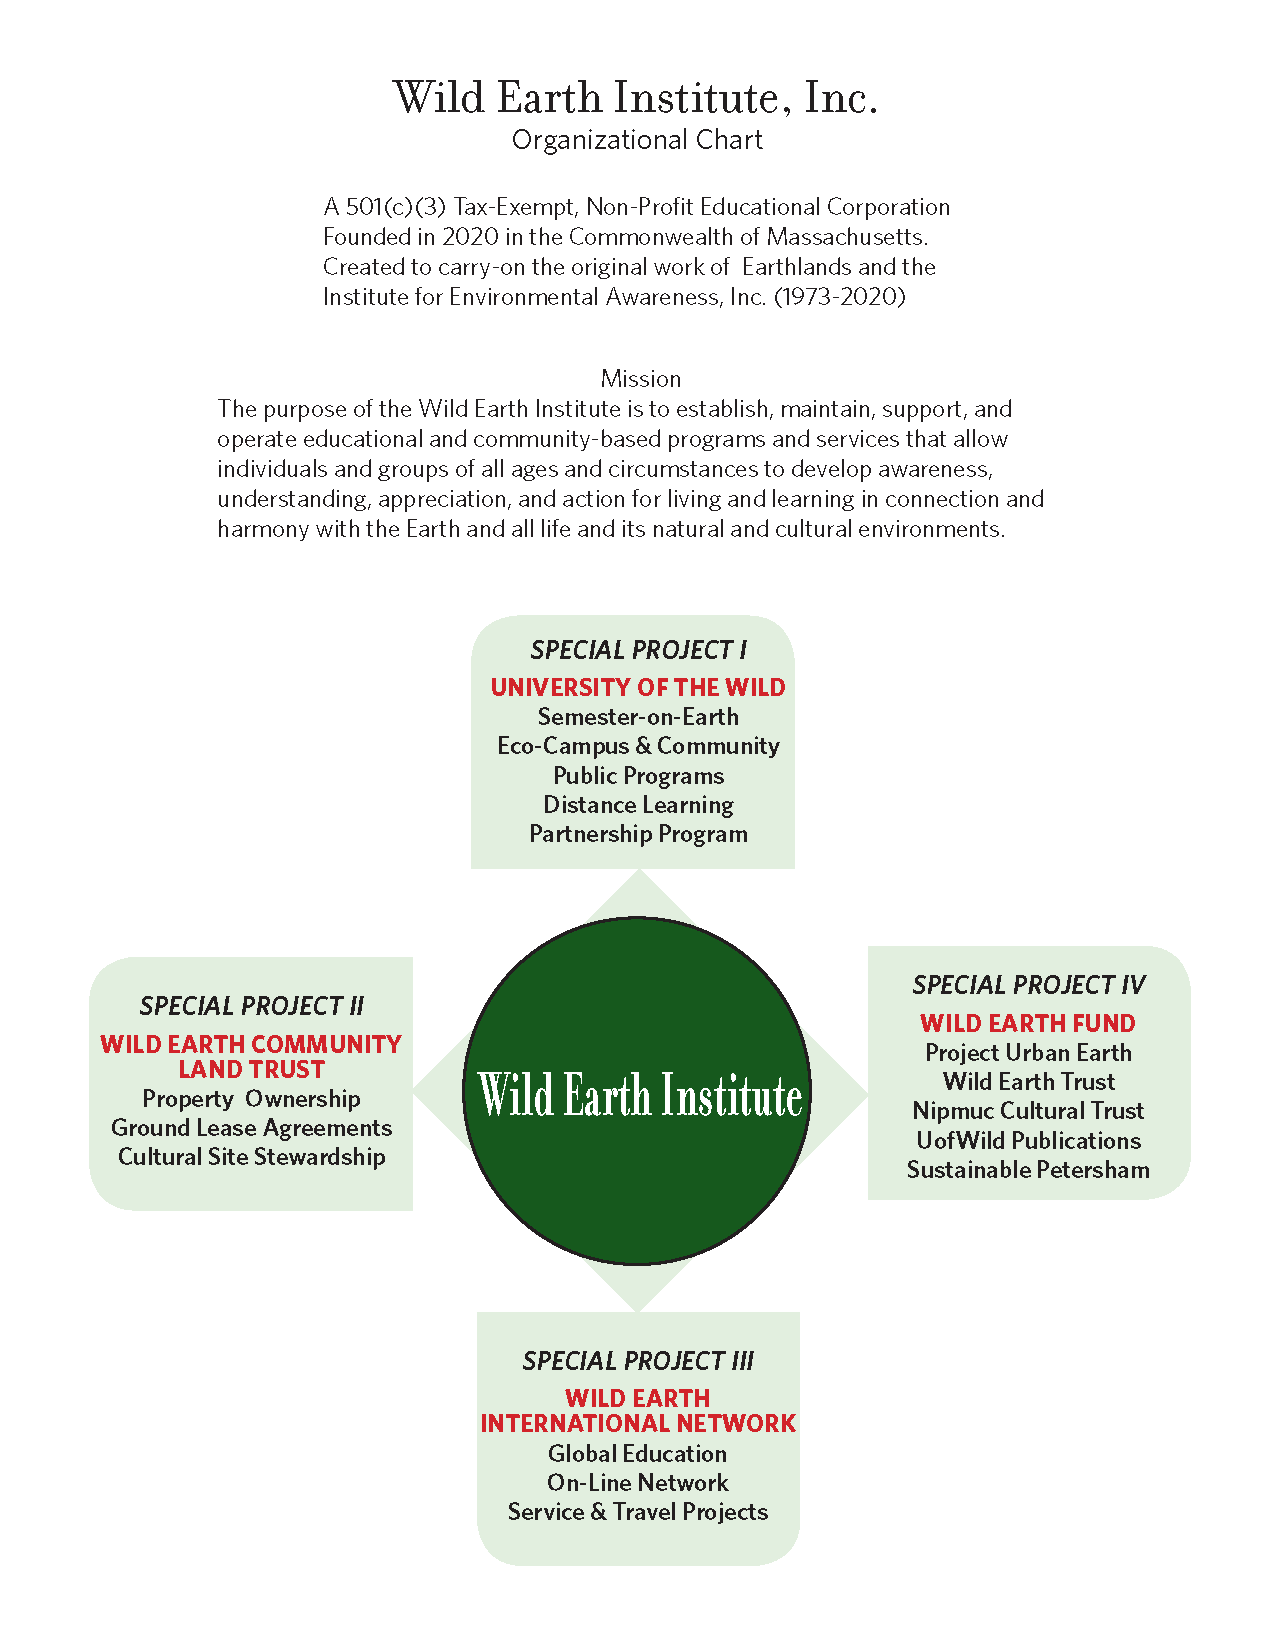 Wild Earth Institute Organization Chart